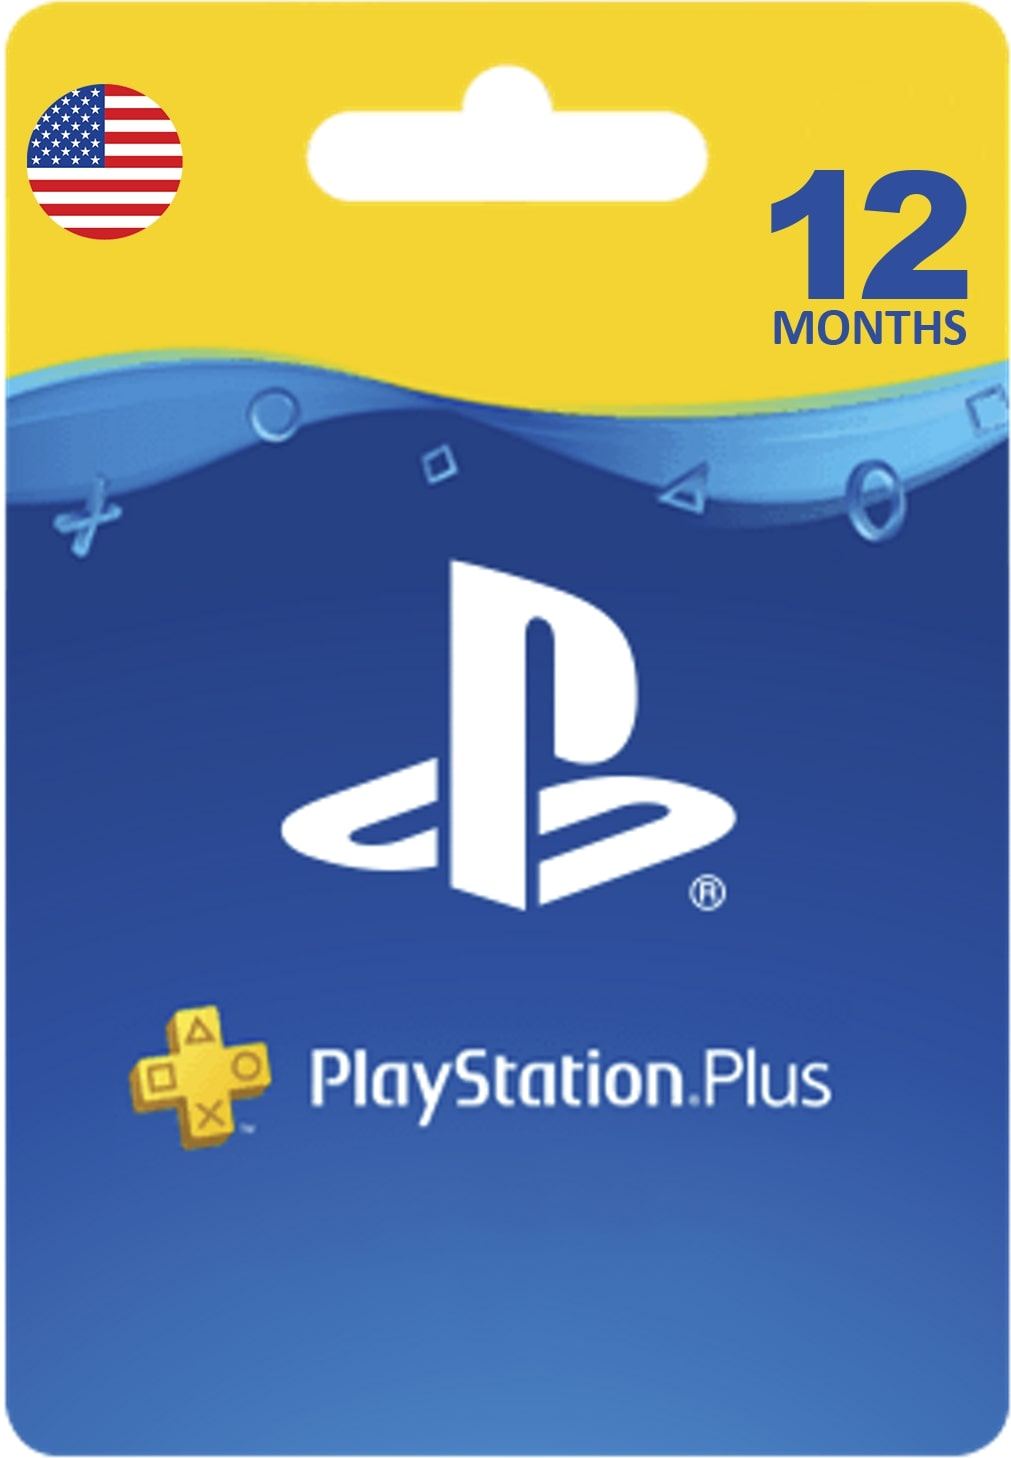 Buy PlayStation gift card & PS Plus membership cheap!